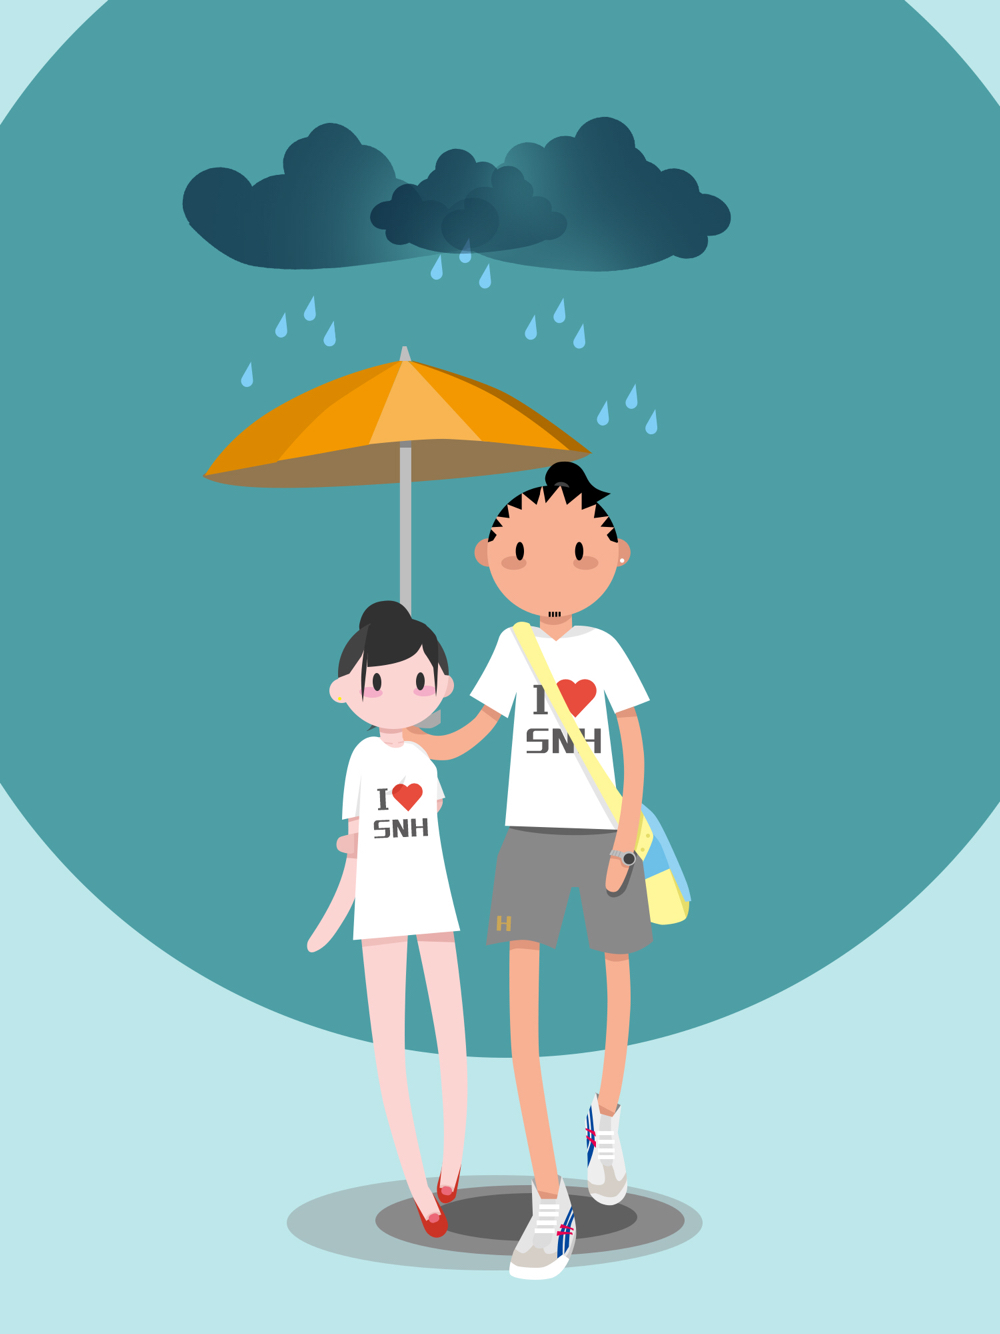 love rain umbrella walking in rain